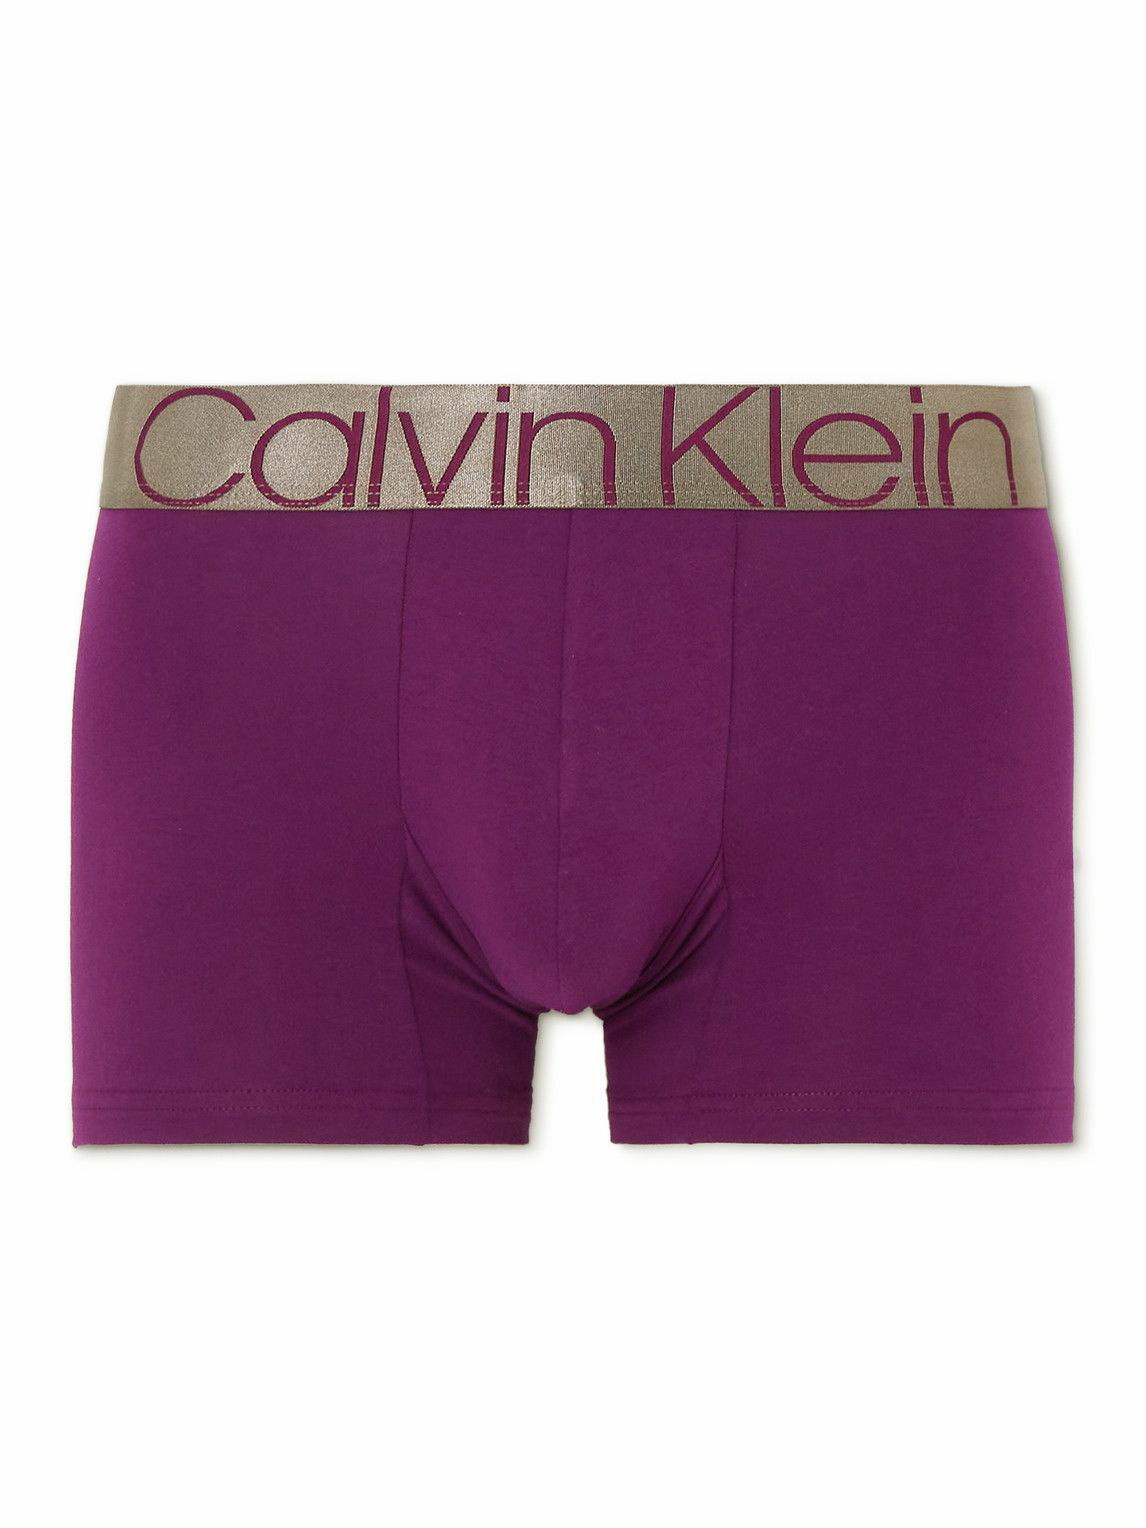 Calvin Klein Sleek G-string 3 Pack - Daybreak in Purple